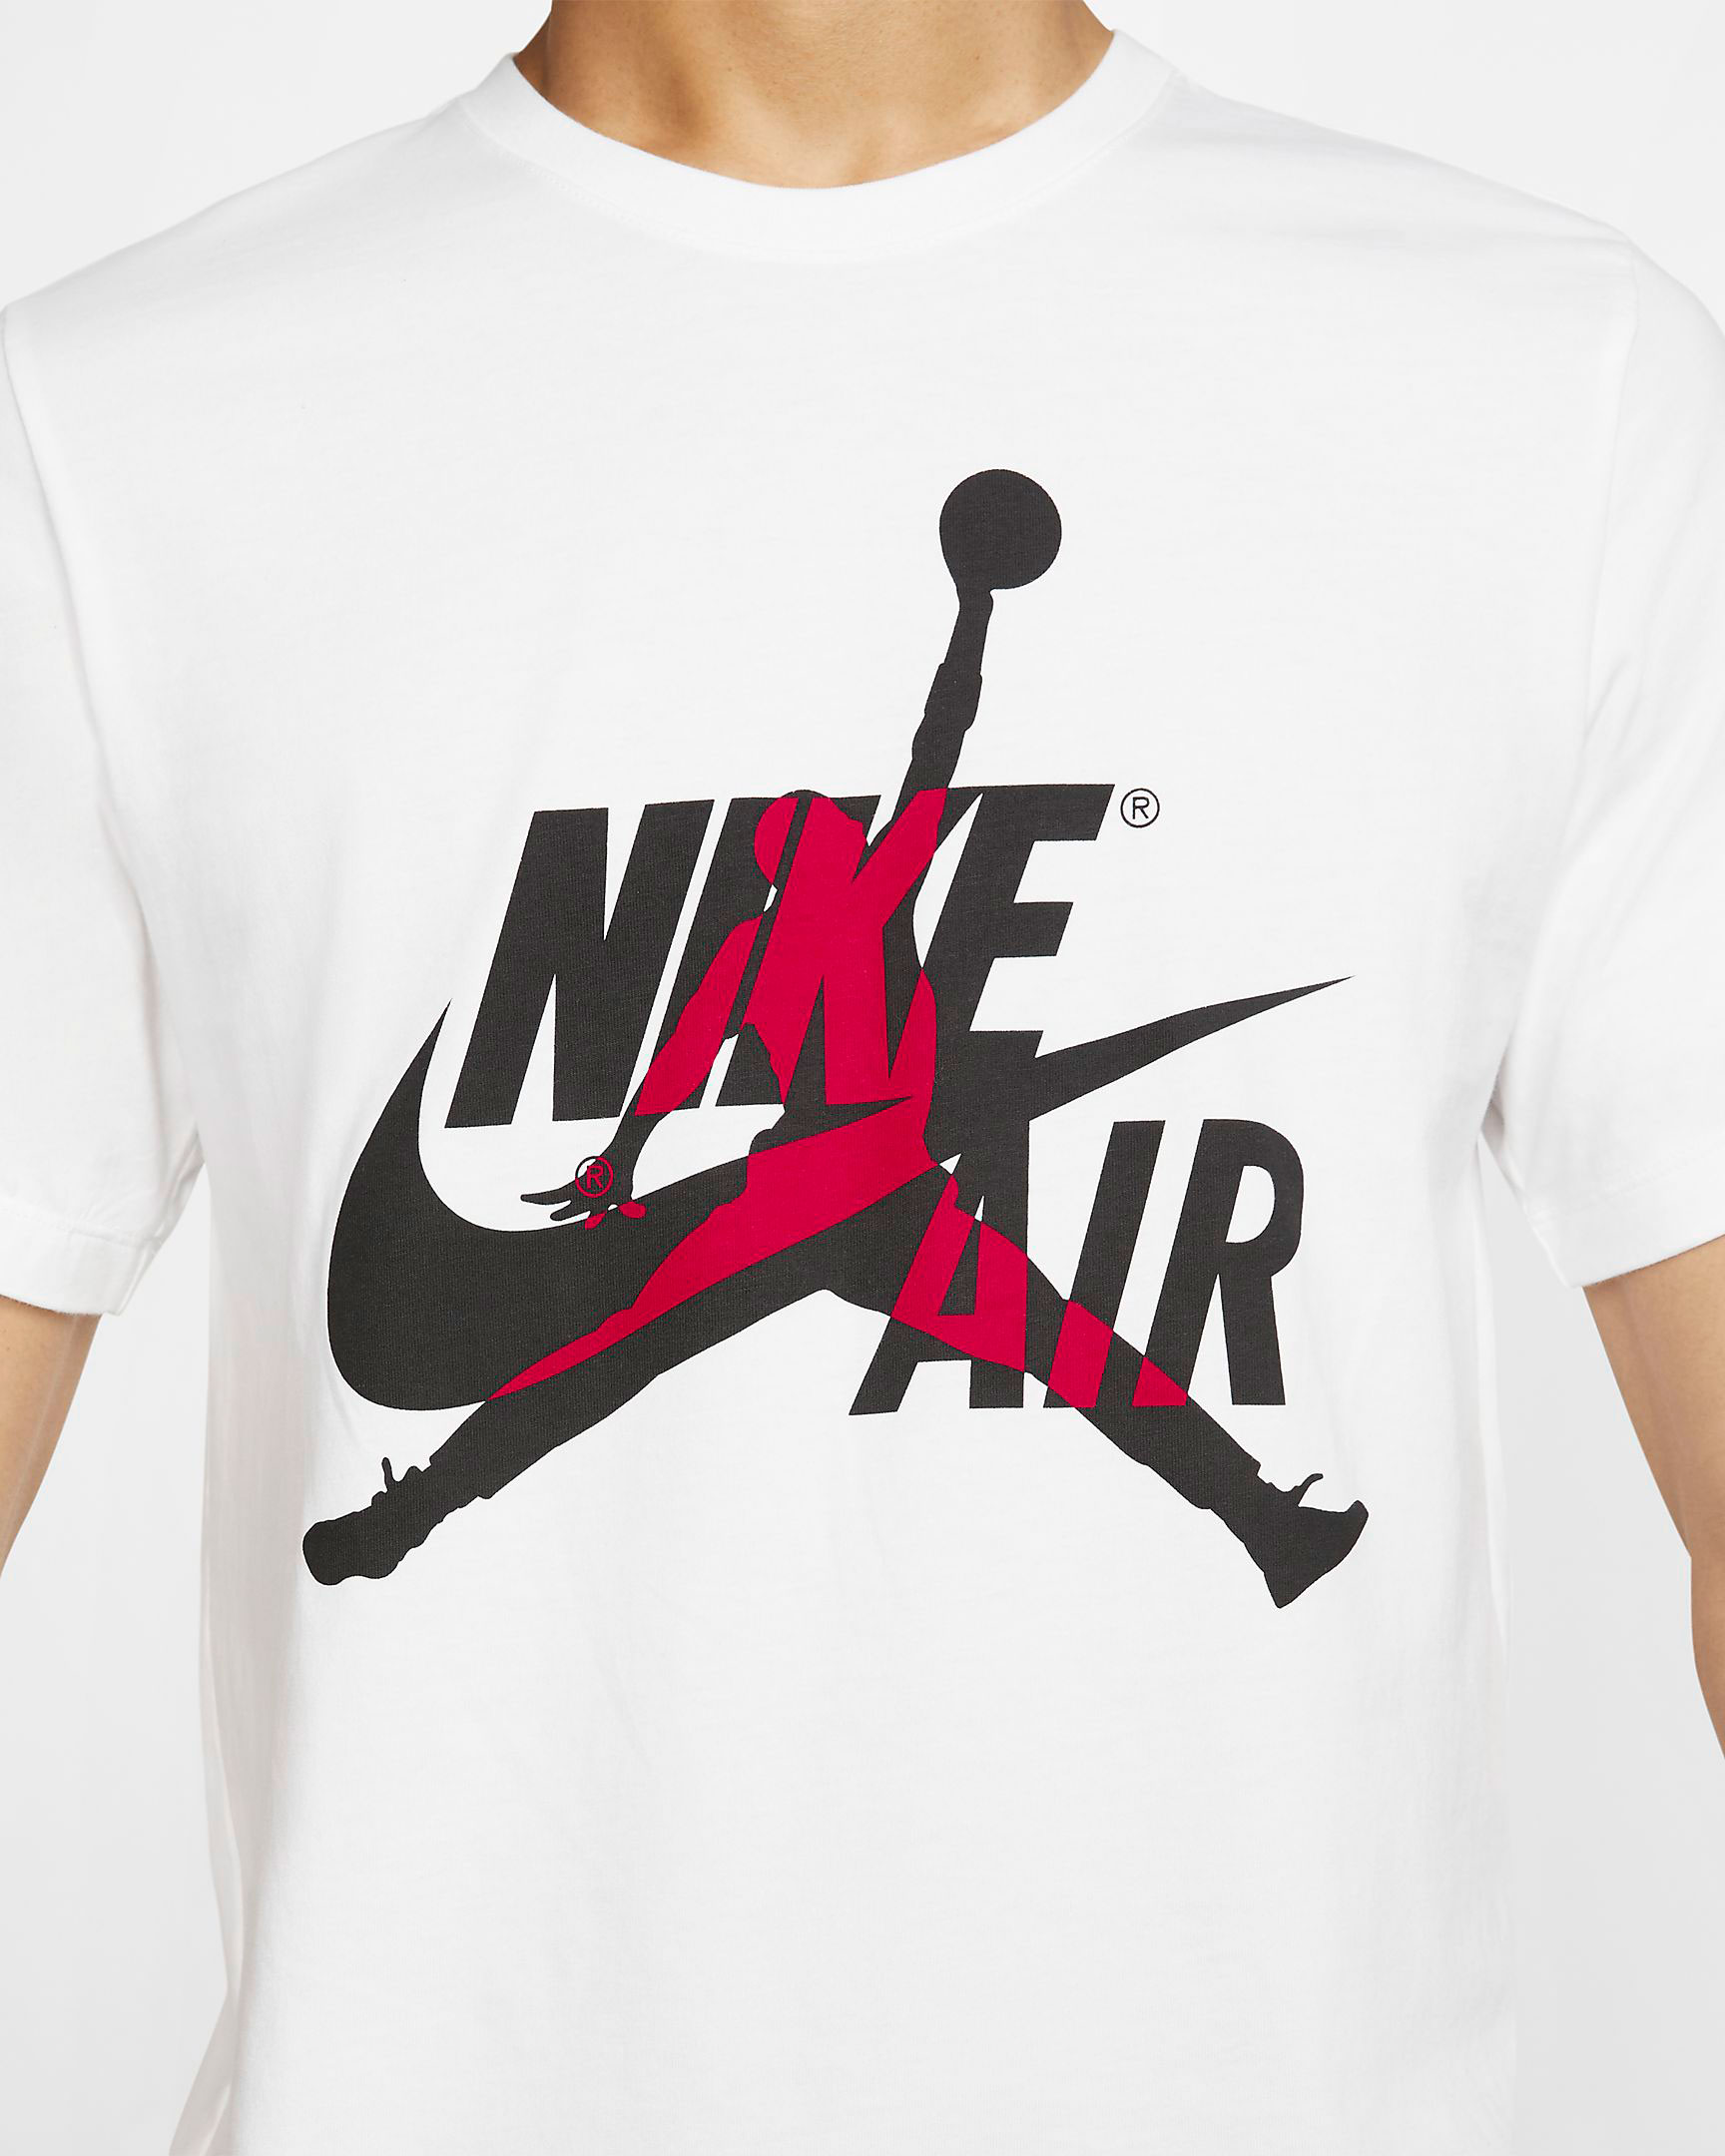 Air Jordan 1 High Gym Red Shirts | SneakerFits.com